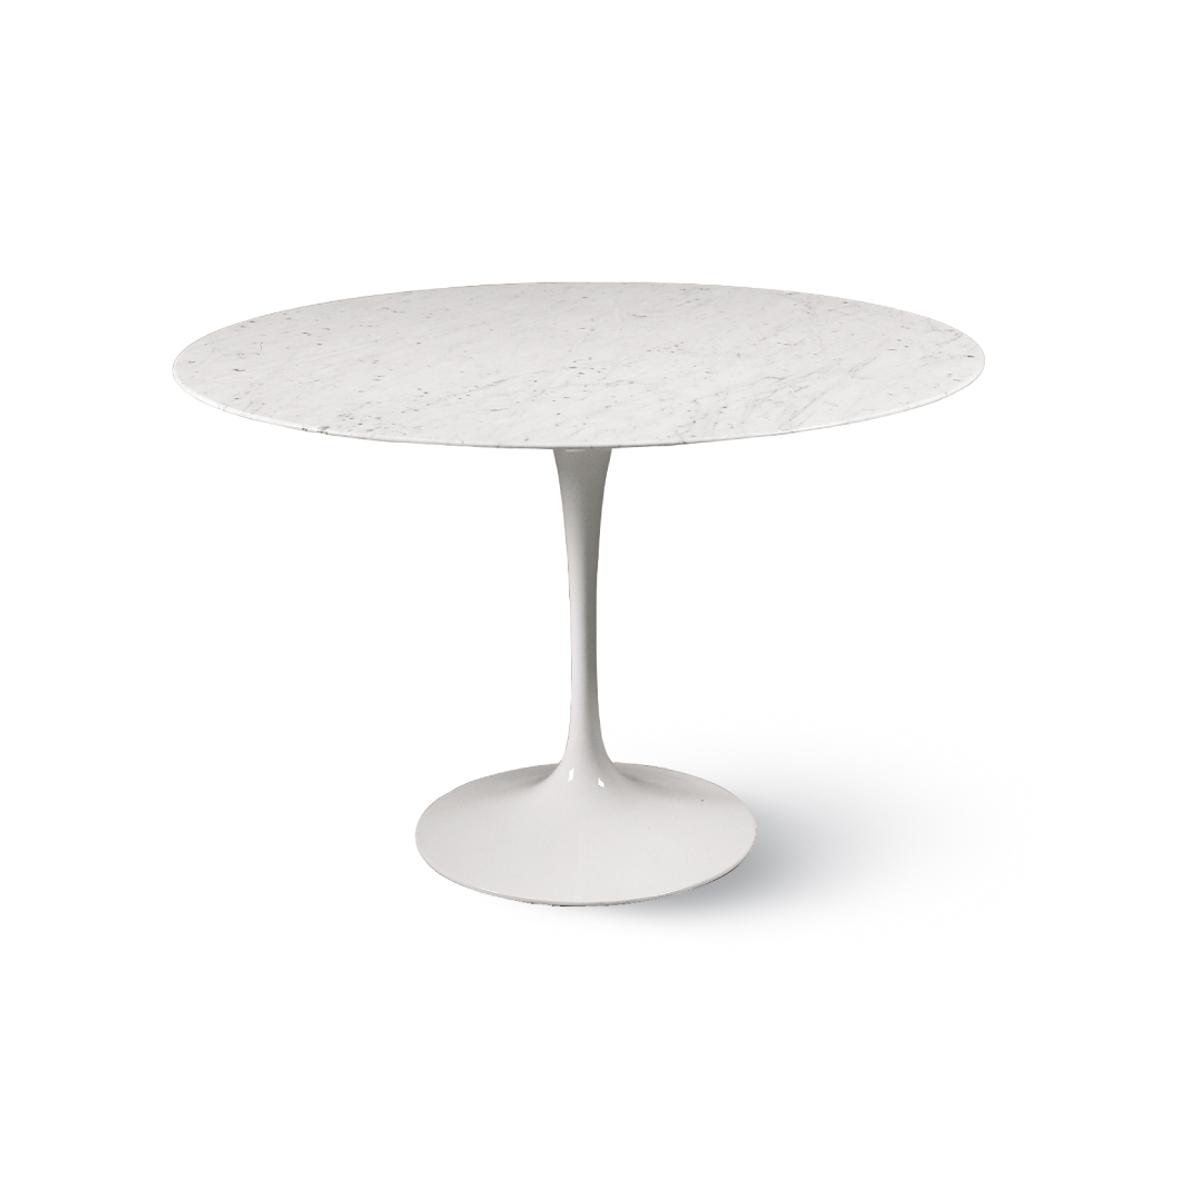 LUX155 Eero Saarinen - Tavolo da pranzo rotondo